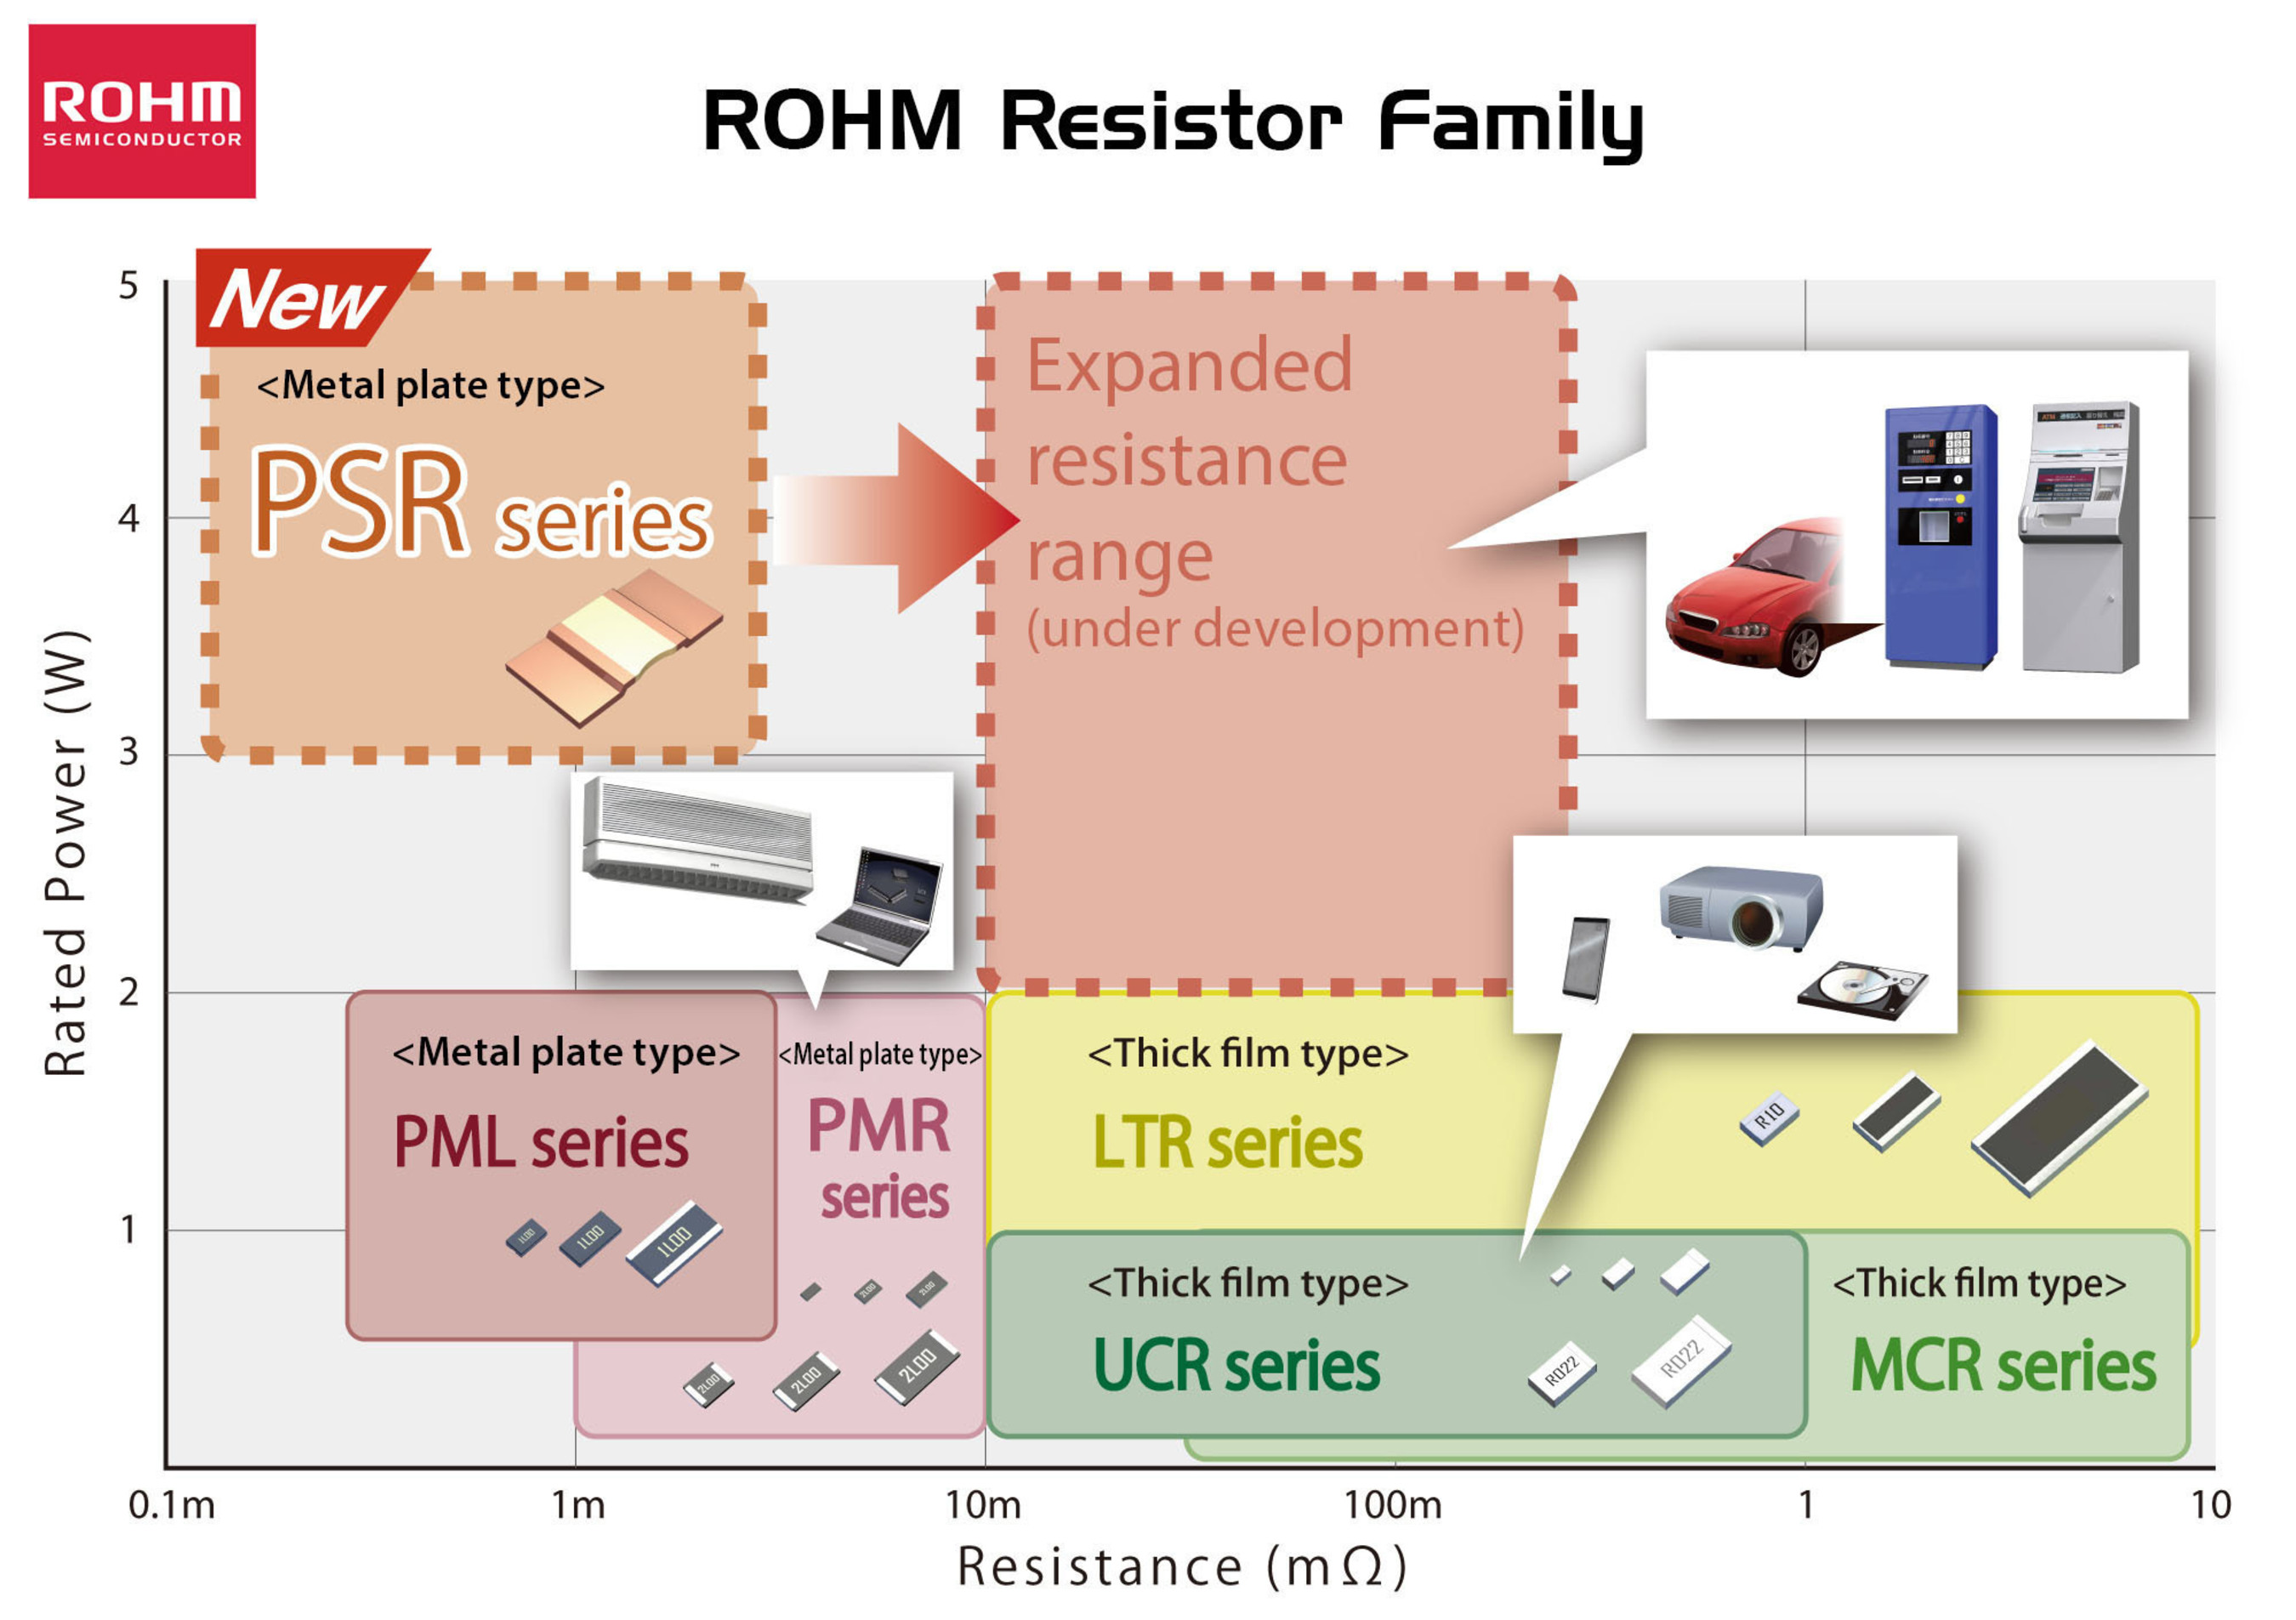 ROHM's Resistor Selection Chart. (PRNewsFoto/ROHM Semiconductor) (PRNewsFoto/ROHM SEMICONDUCTOR)